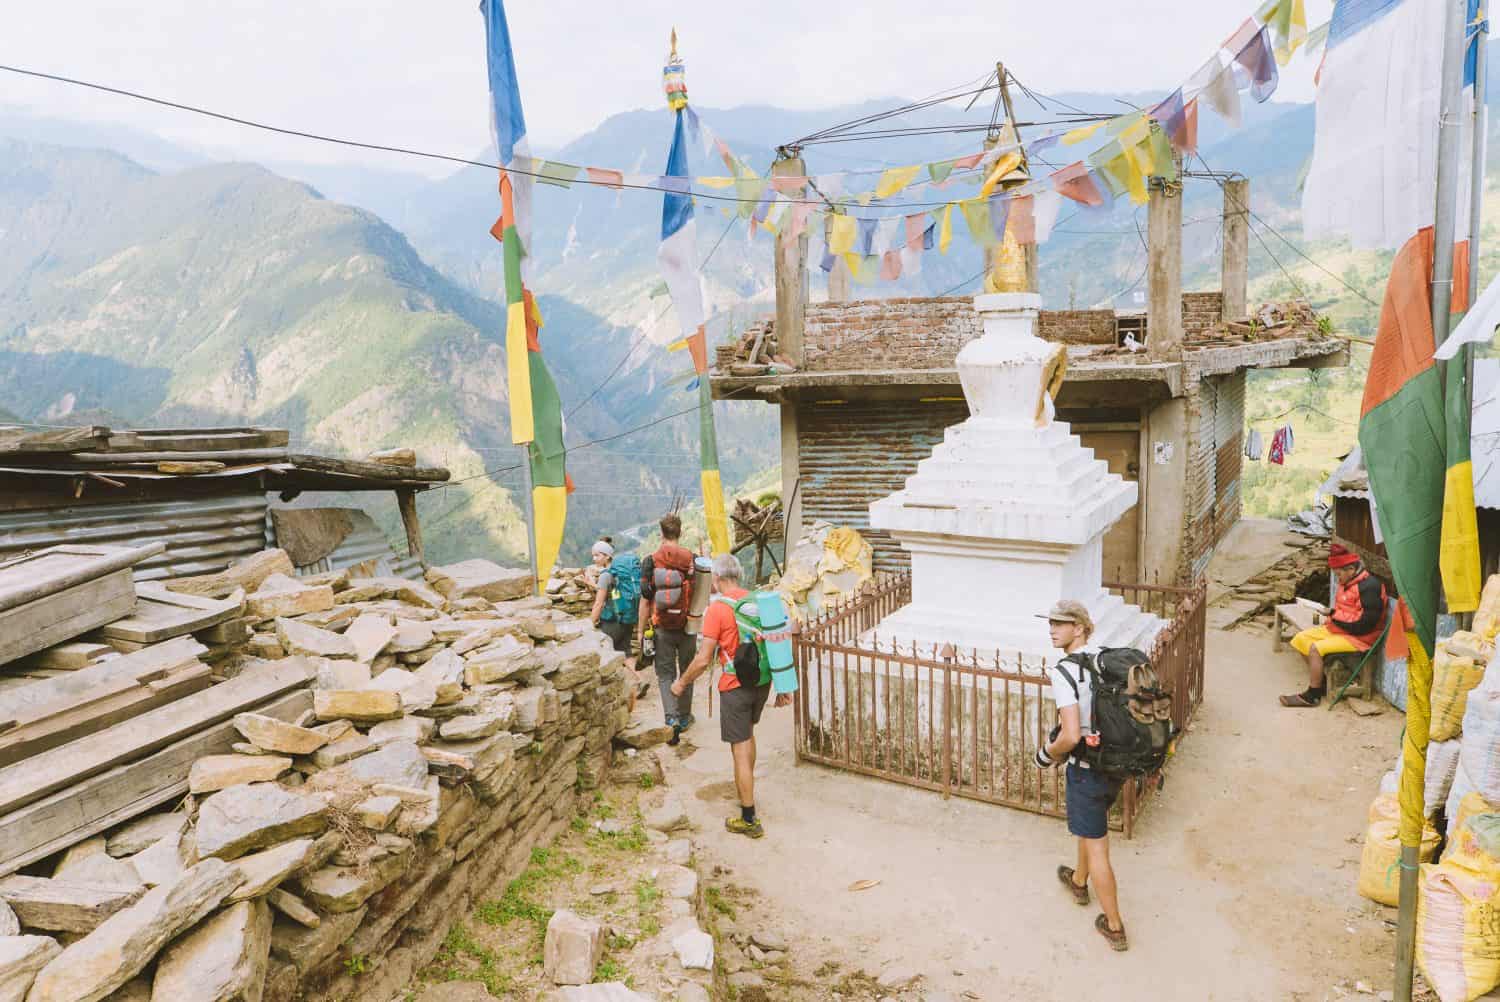 Himalayan Life Adventures trekking participants walk through a high Sherpa village in the Himalayas.